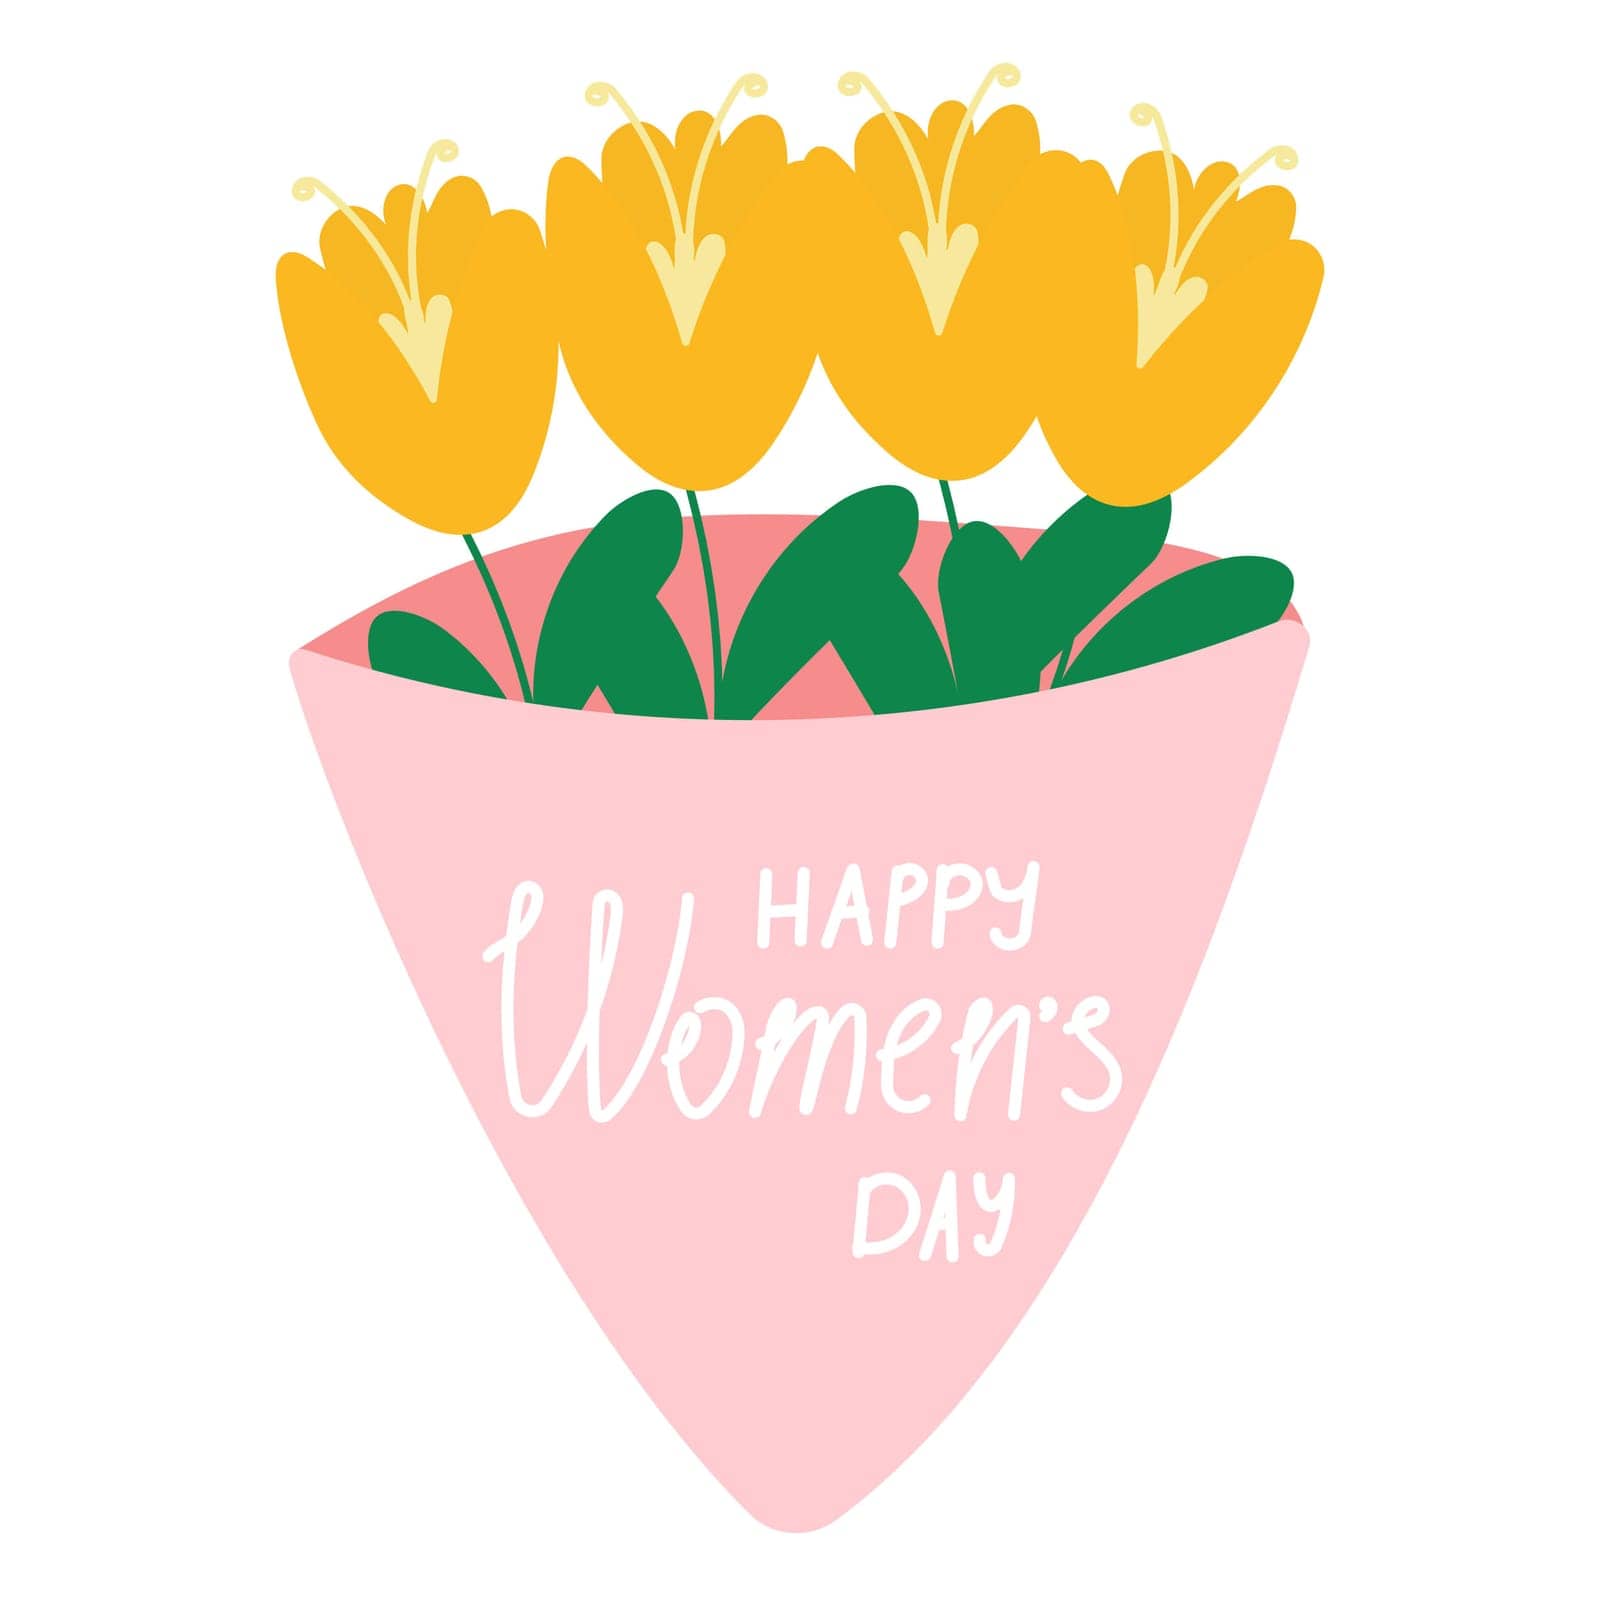 Greeting card honor of International Womens Day by kristushka_15_108